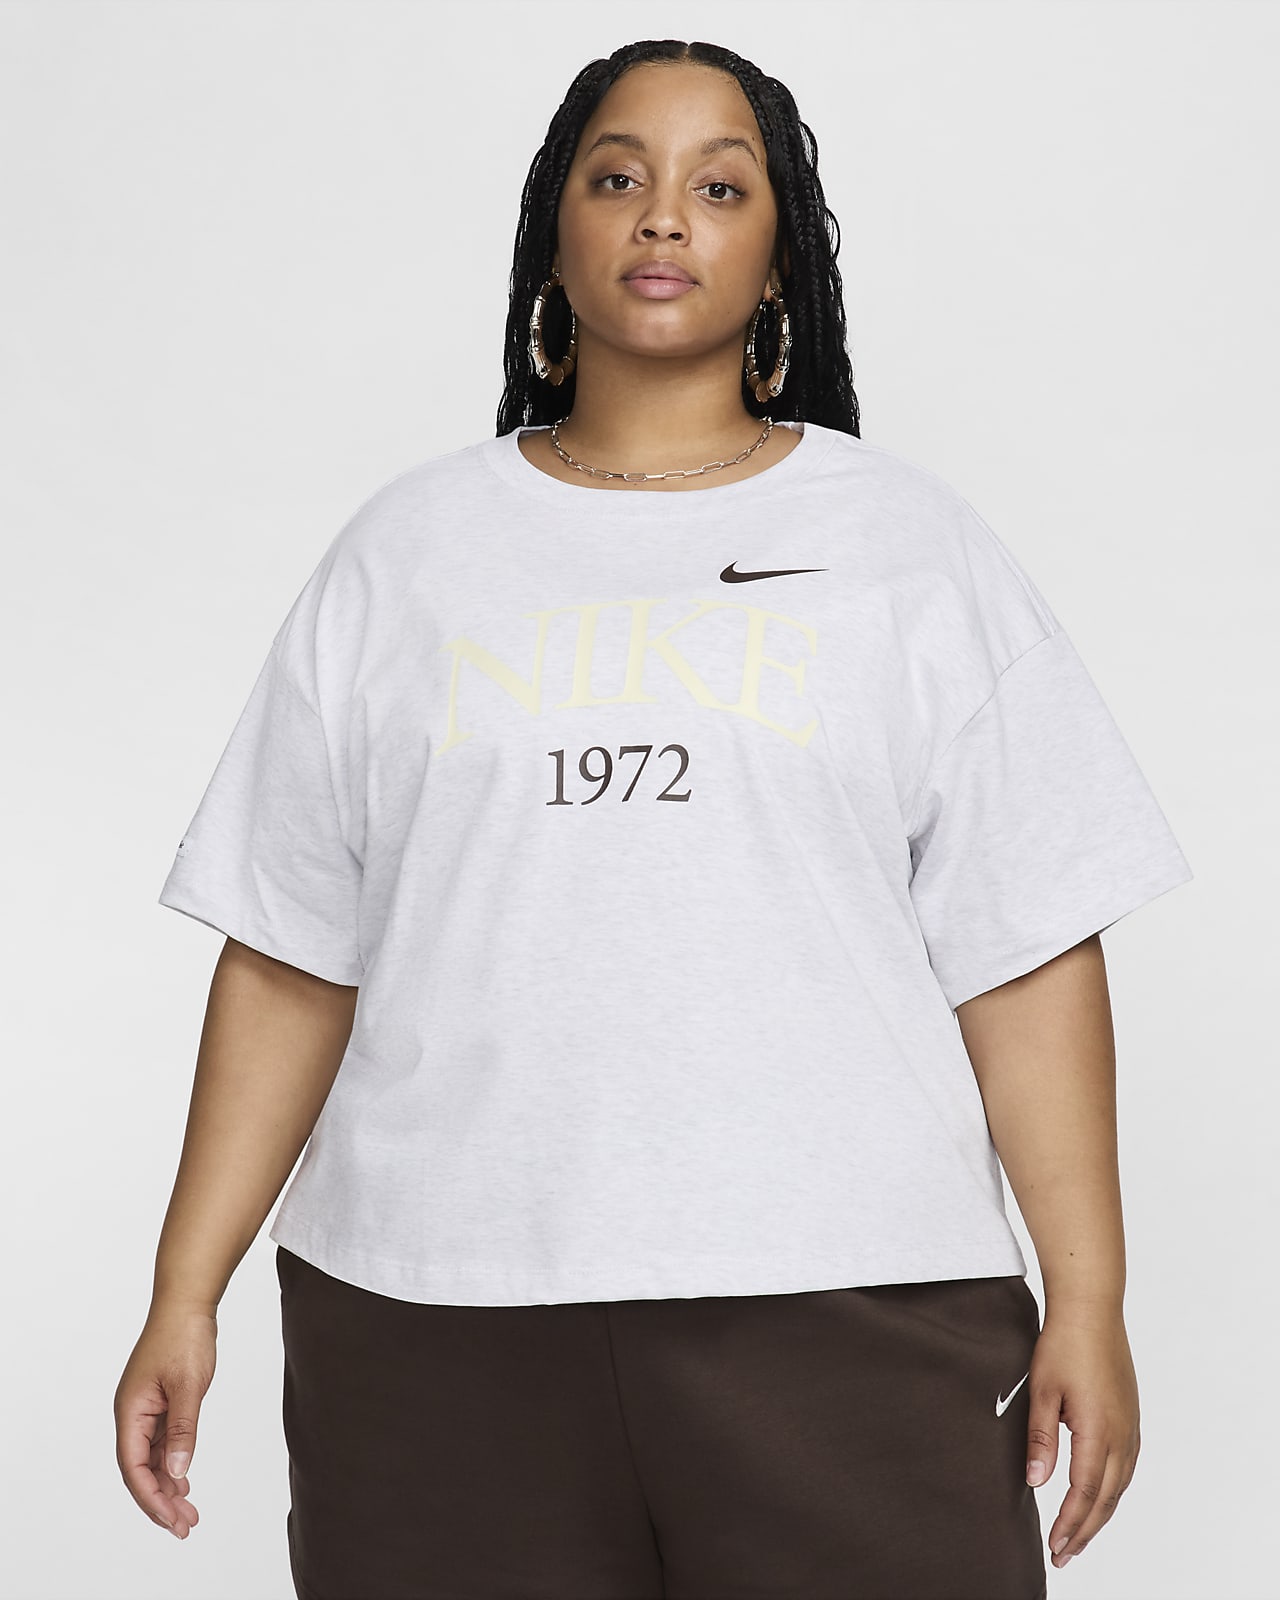 Playera para mujer (talla grande) Nike Sportswear Classic